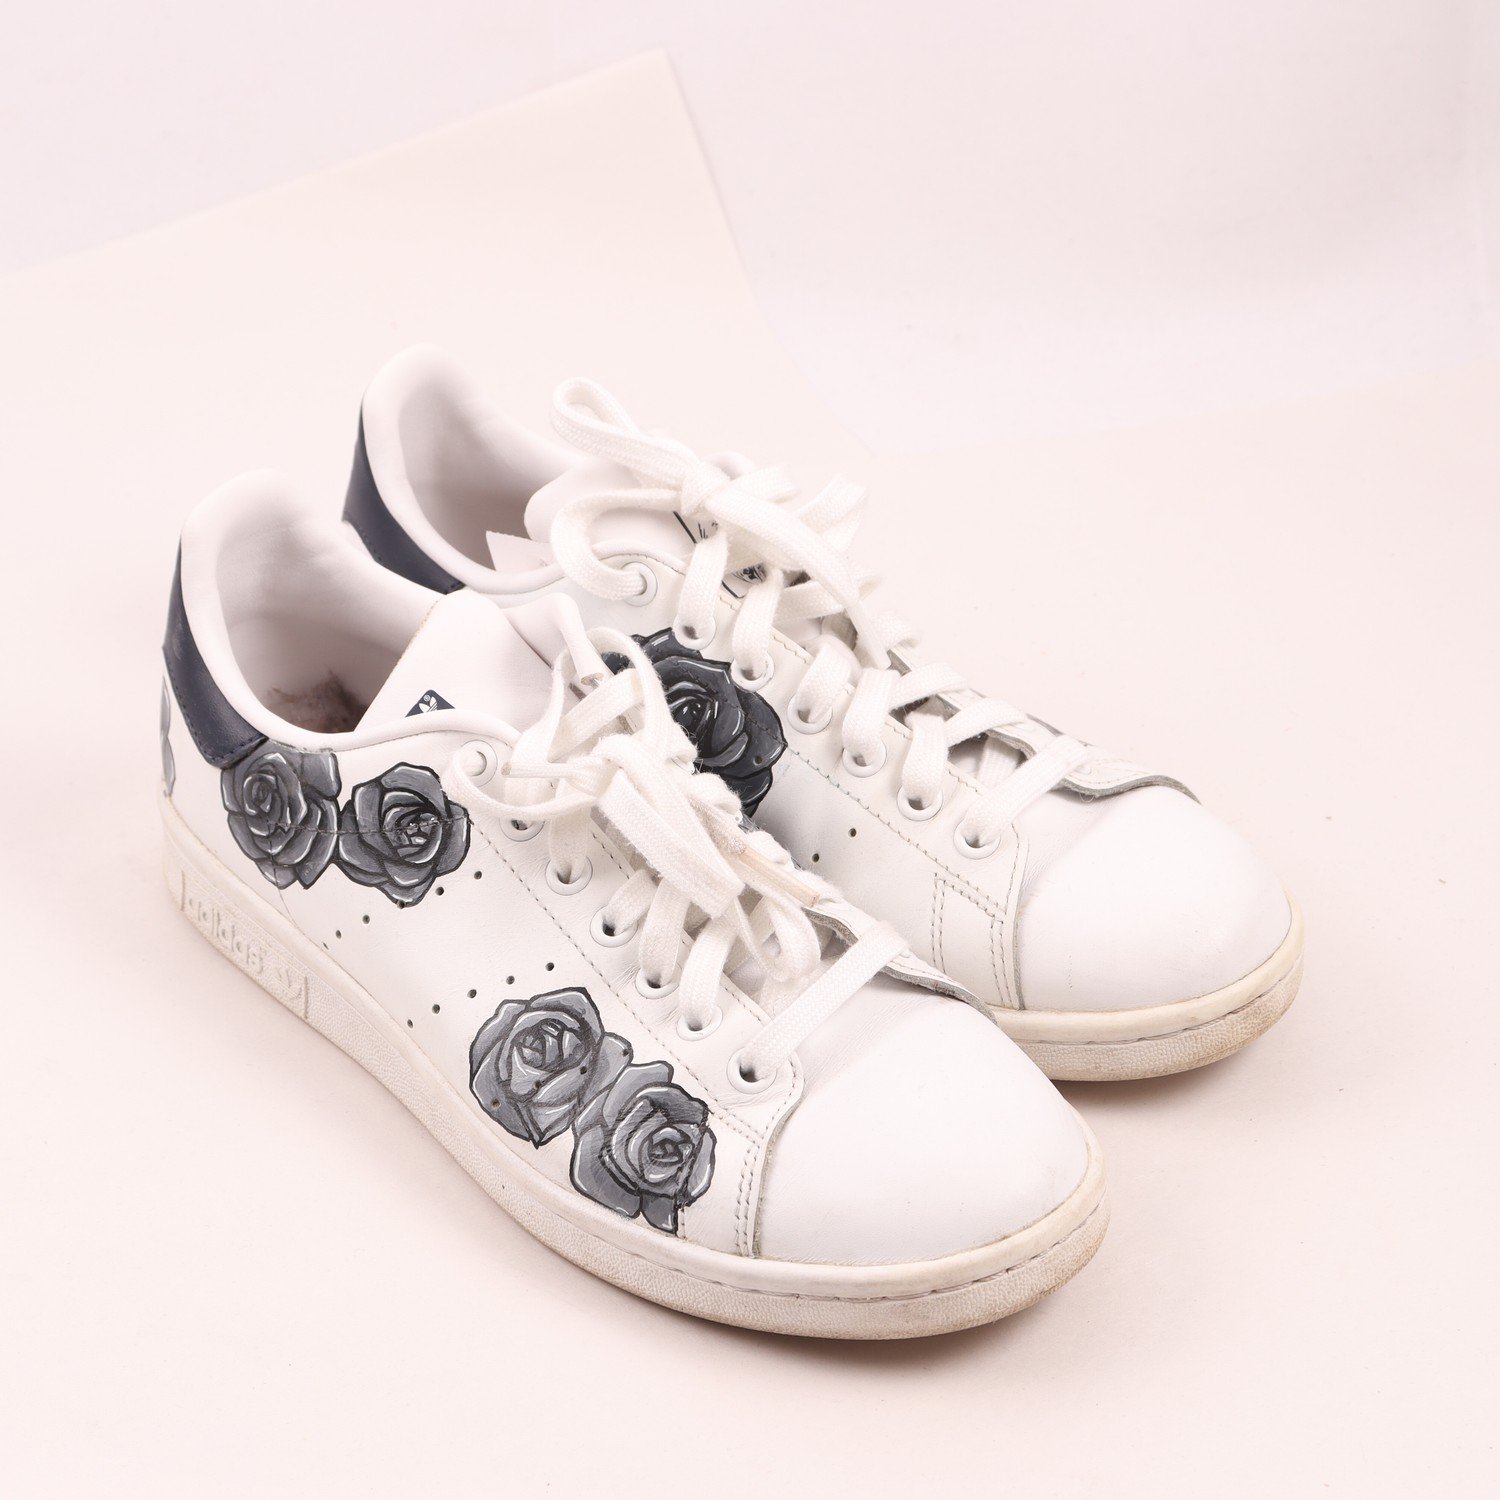 Sneakers, Adidas x Stan Smith, vit, grå, stl. 38